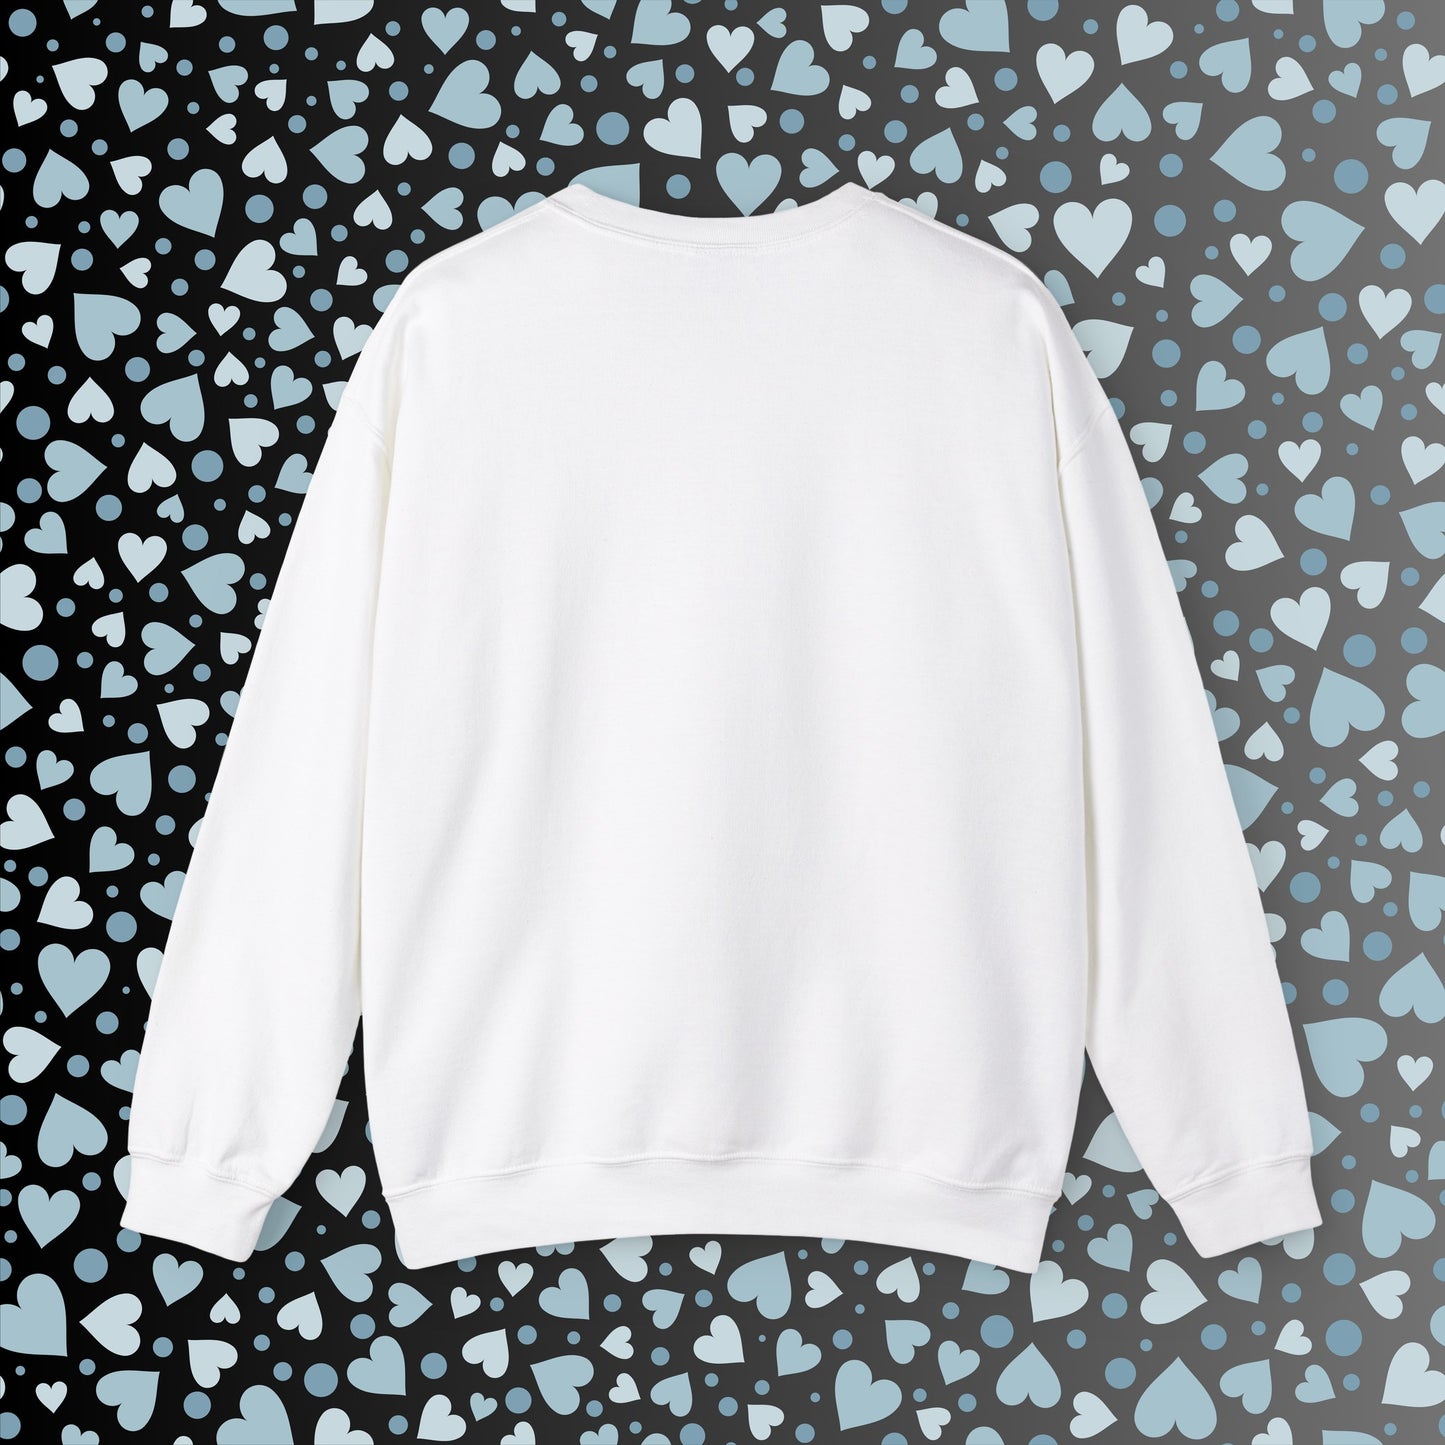 Ocean's Best Friend Sweatshirt Unisex Heavy Blend™ Crewneck Sweatshirt